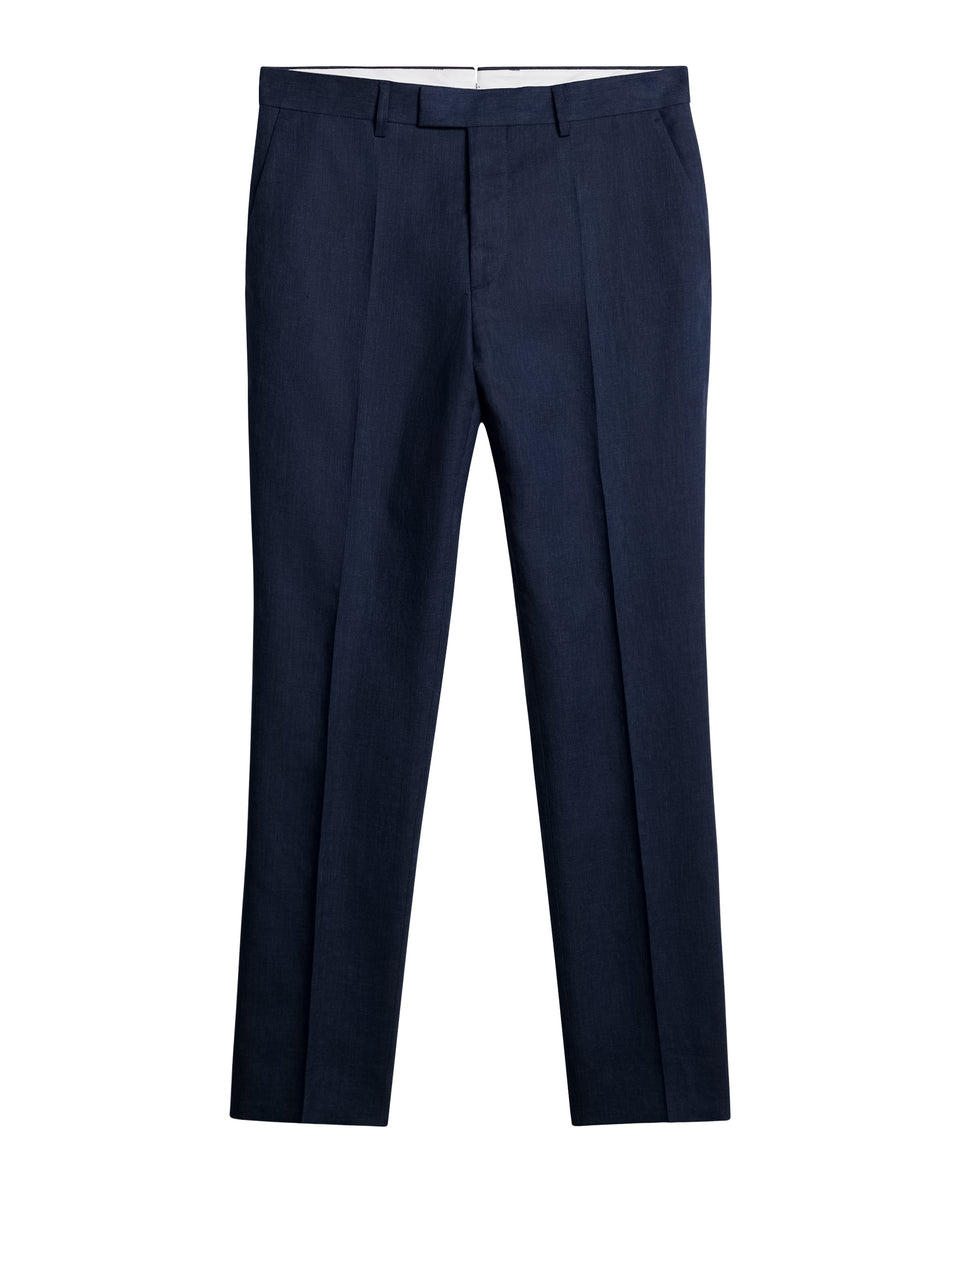 Lois Super Linen Pants / JL Navy